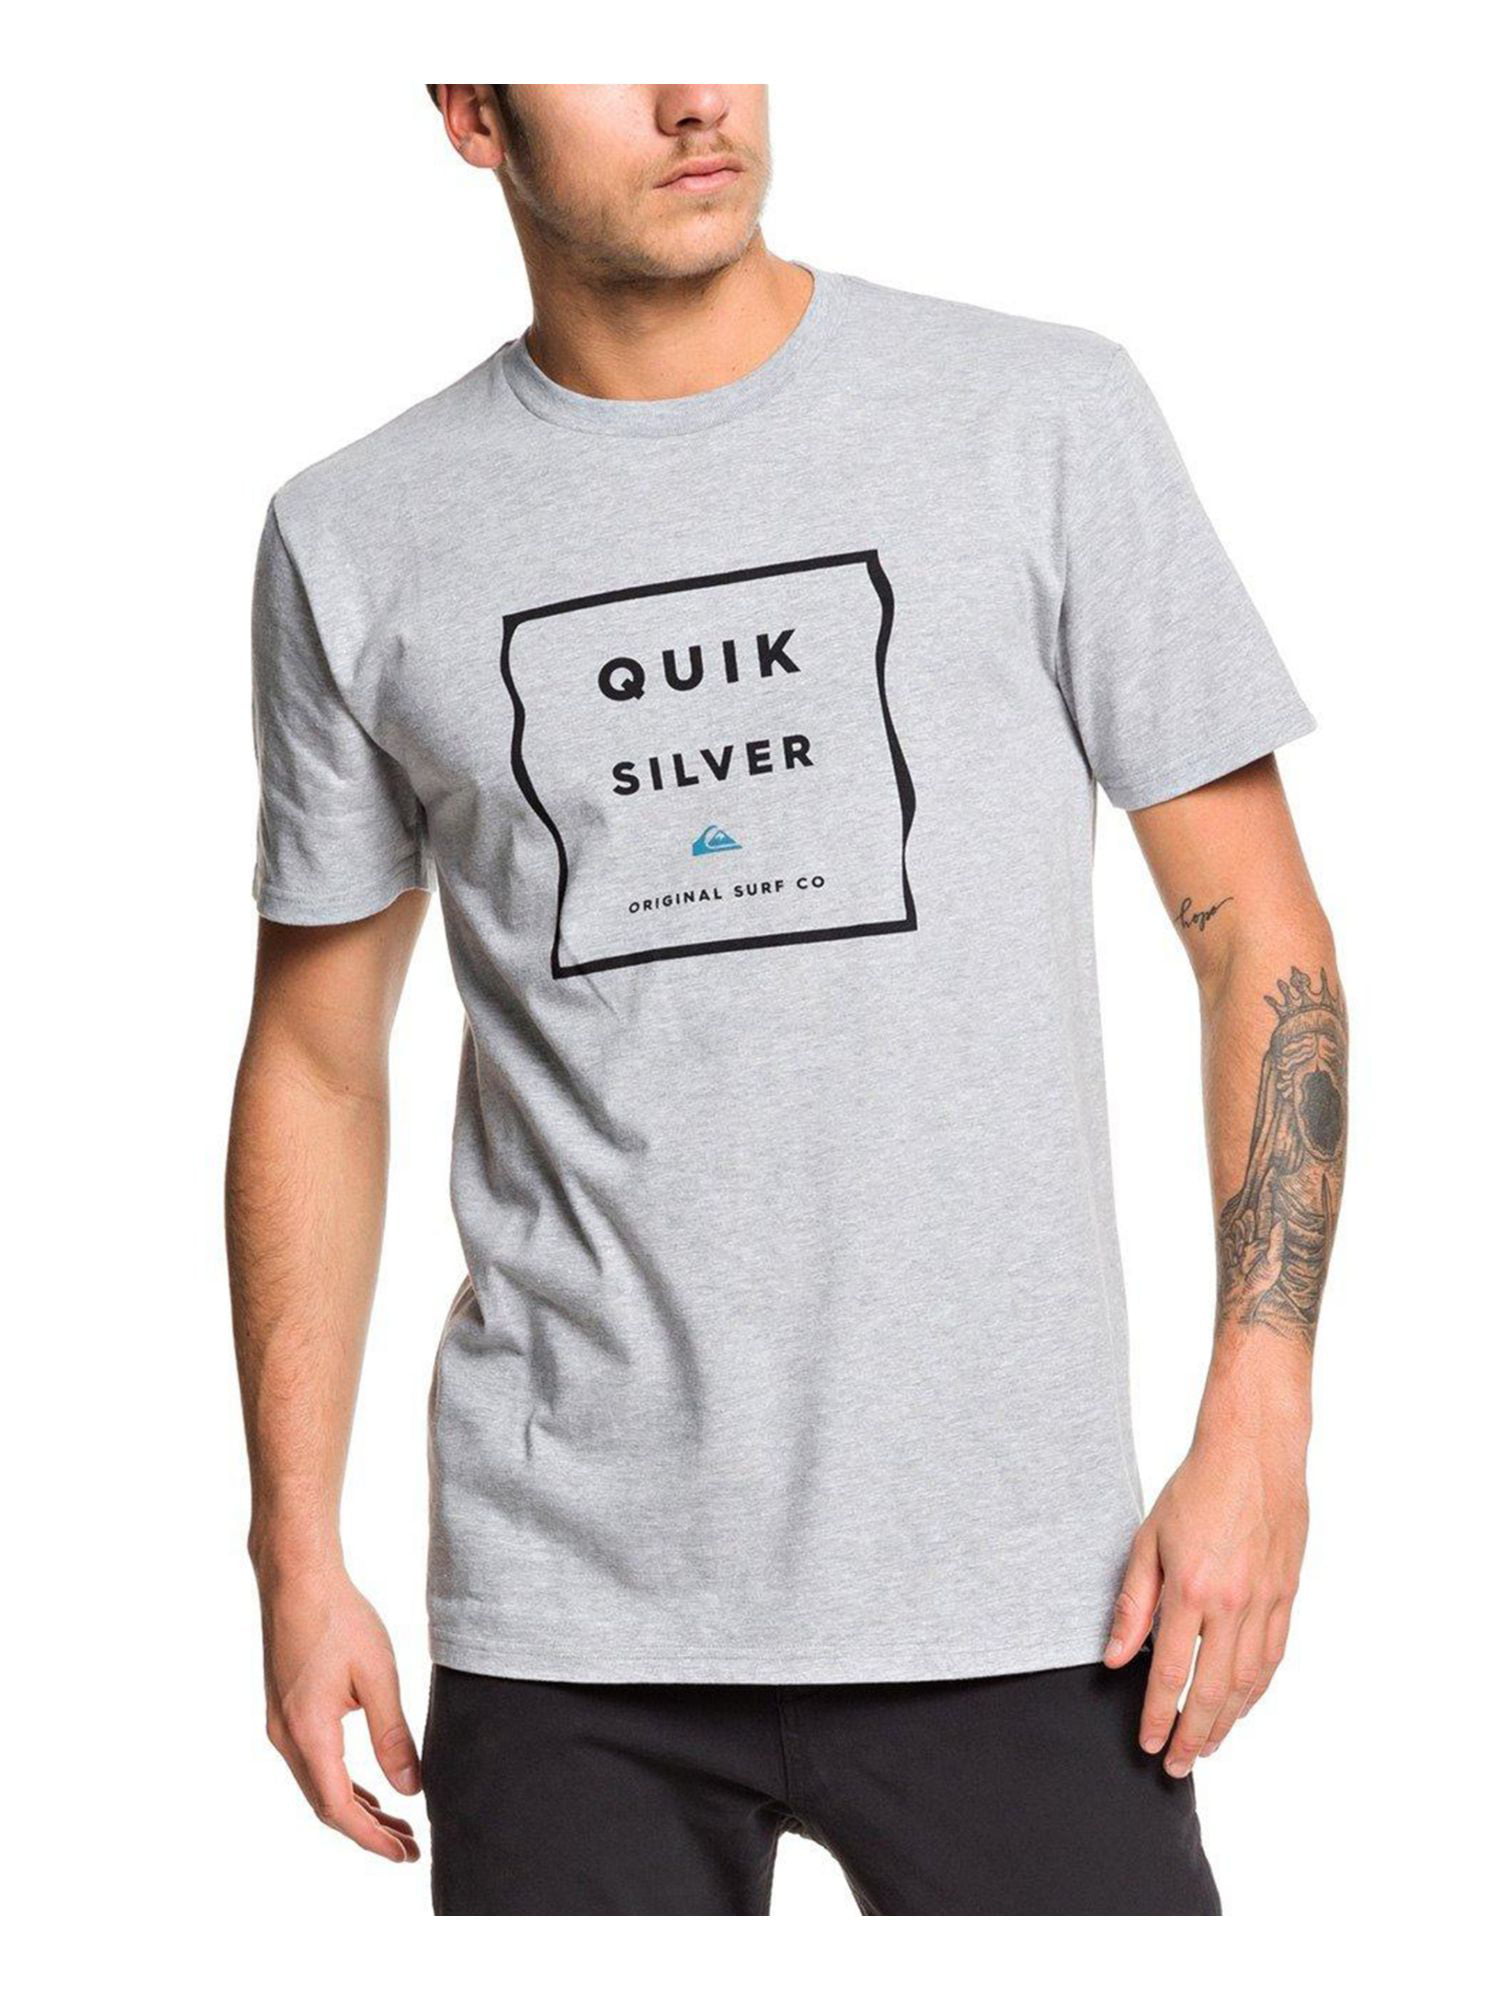 QUICKSILVER Mens Gray Printed Short Sleeve Classic T-Shirt M